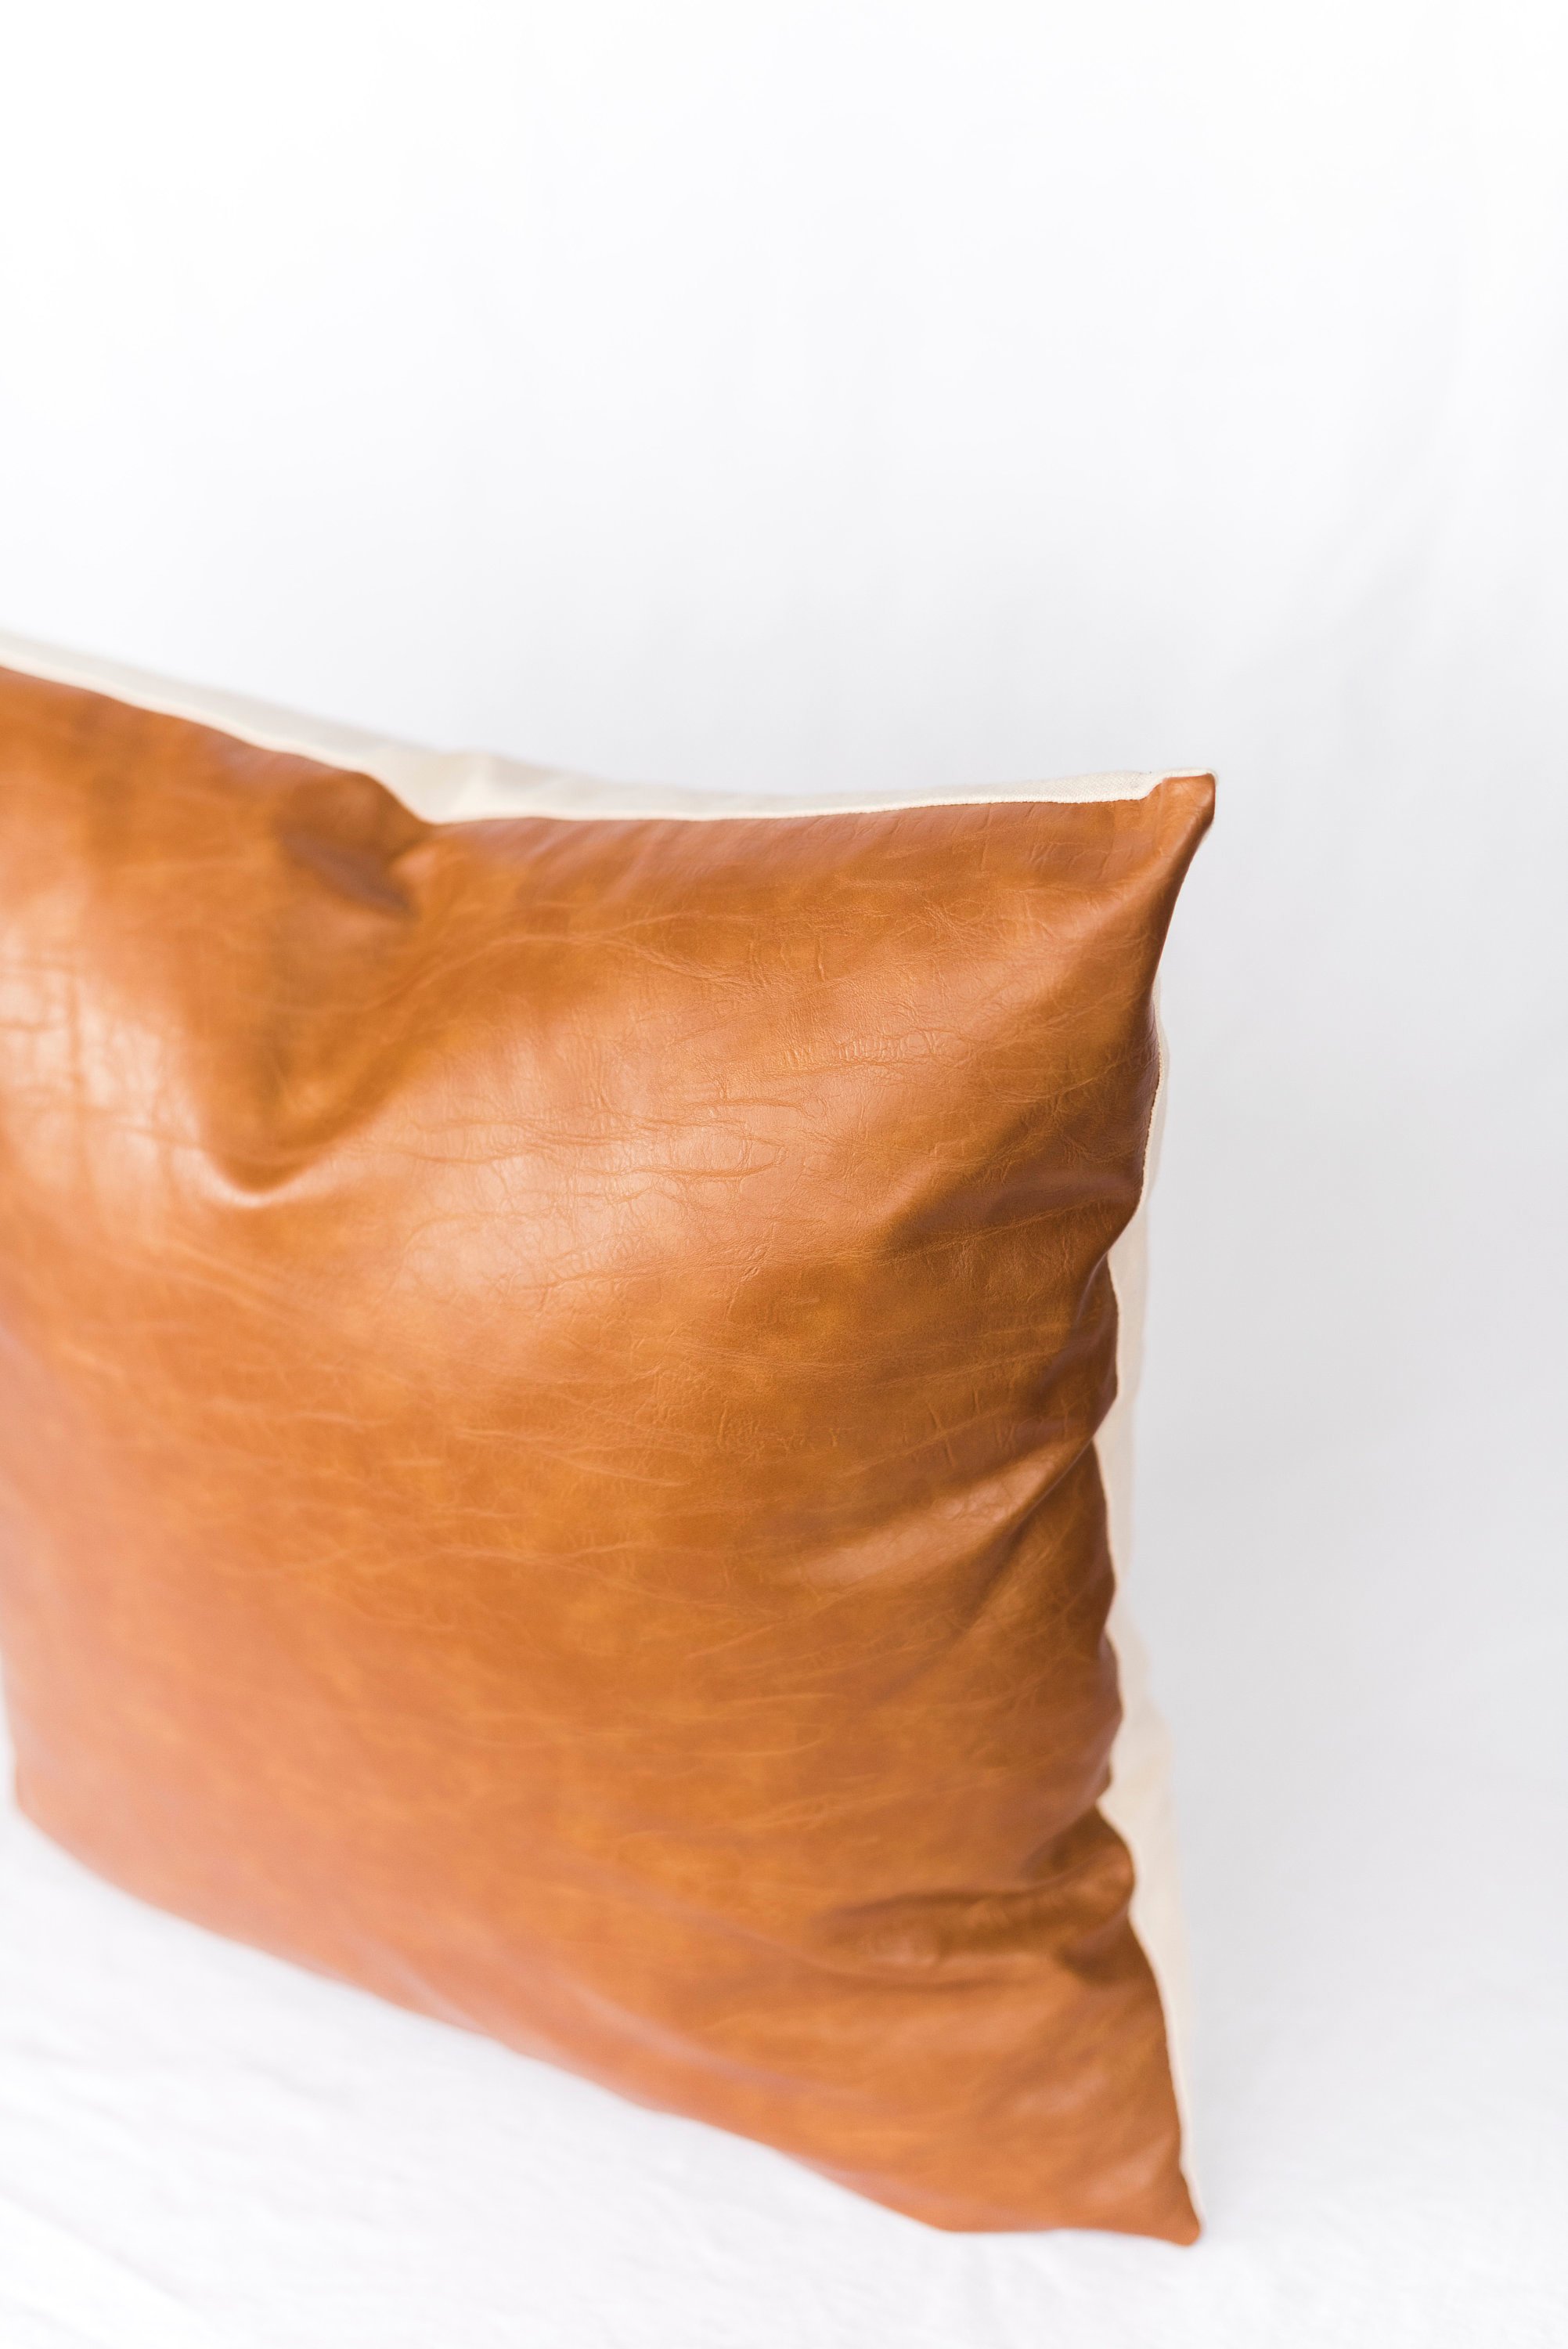 Marlan Mid Century Modern Camel Brown Leather Decorative Throw Pillow -  20x20 20X20